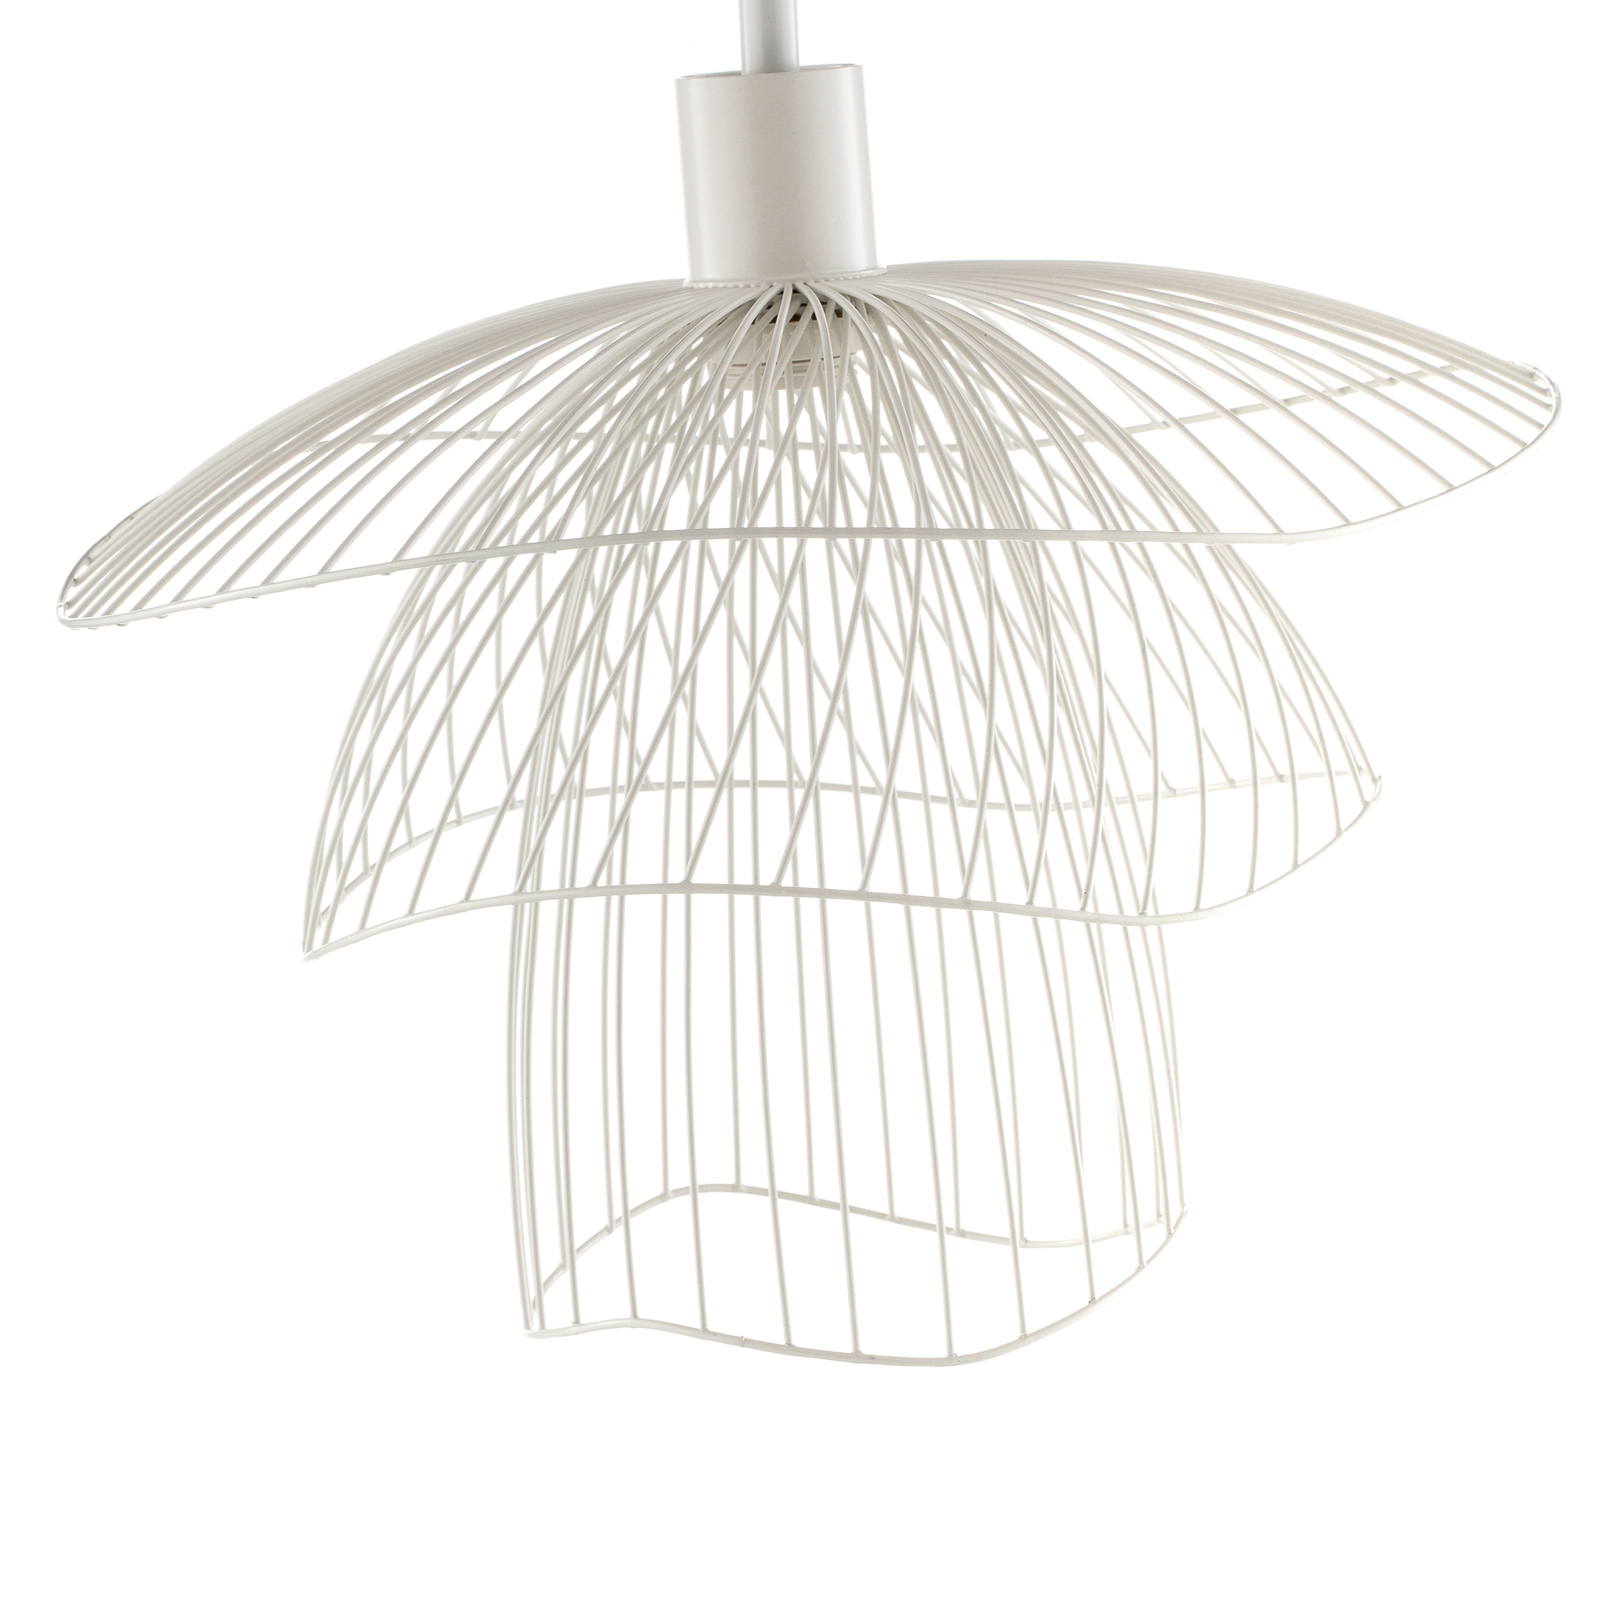 Forestier Papillon XS table lamp, white